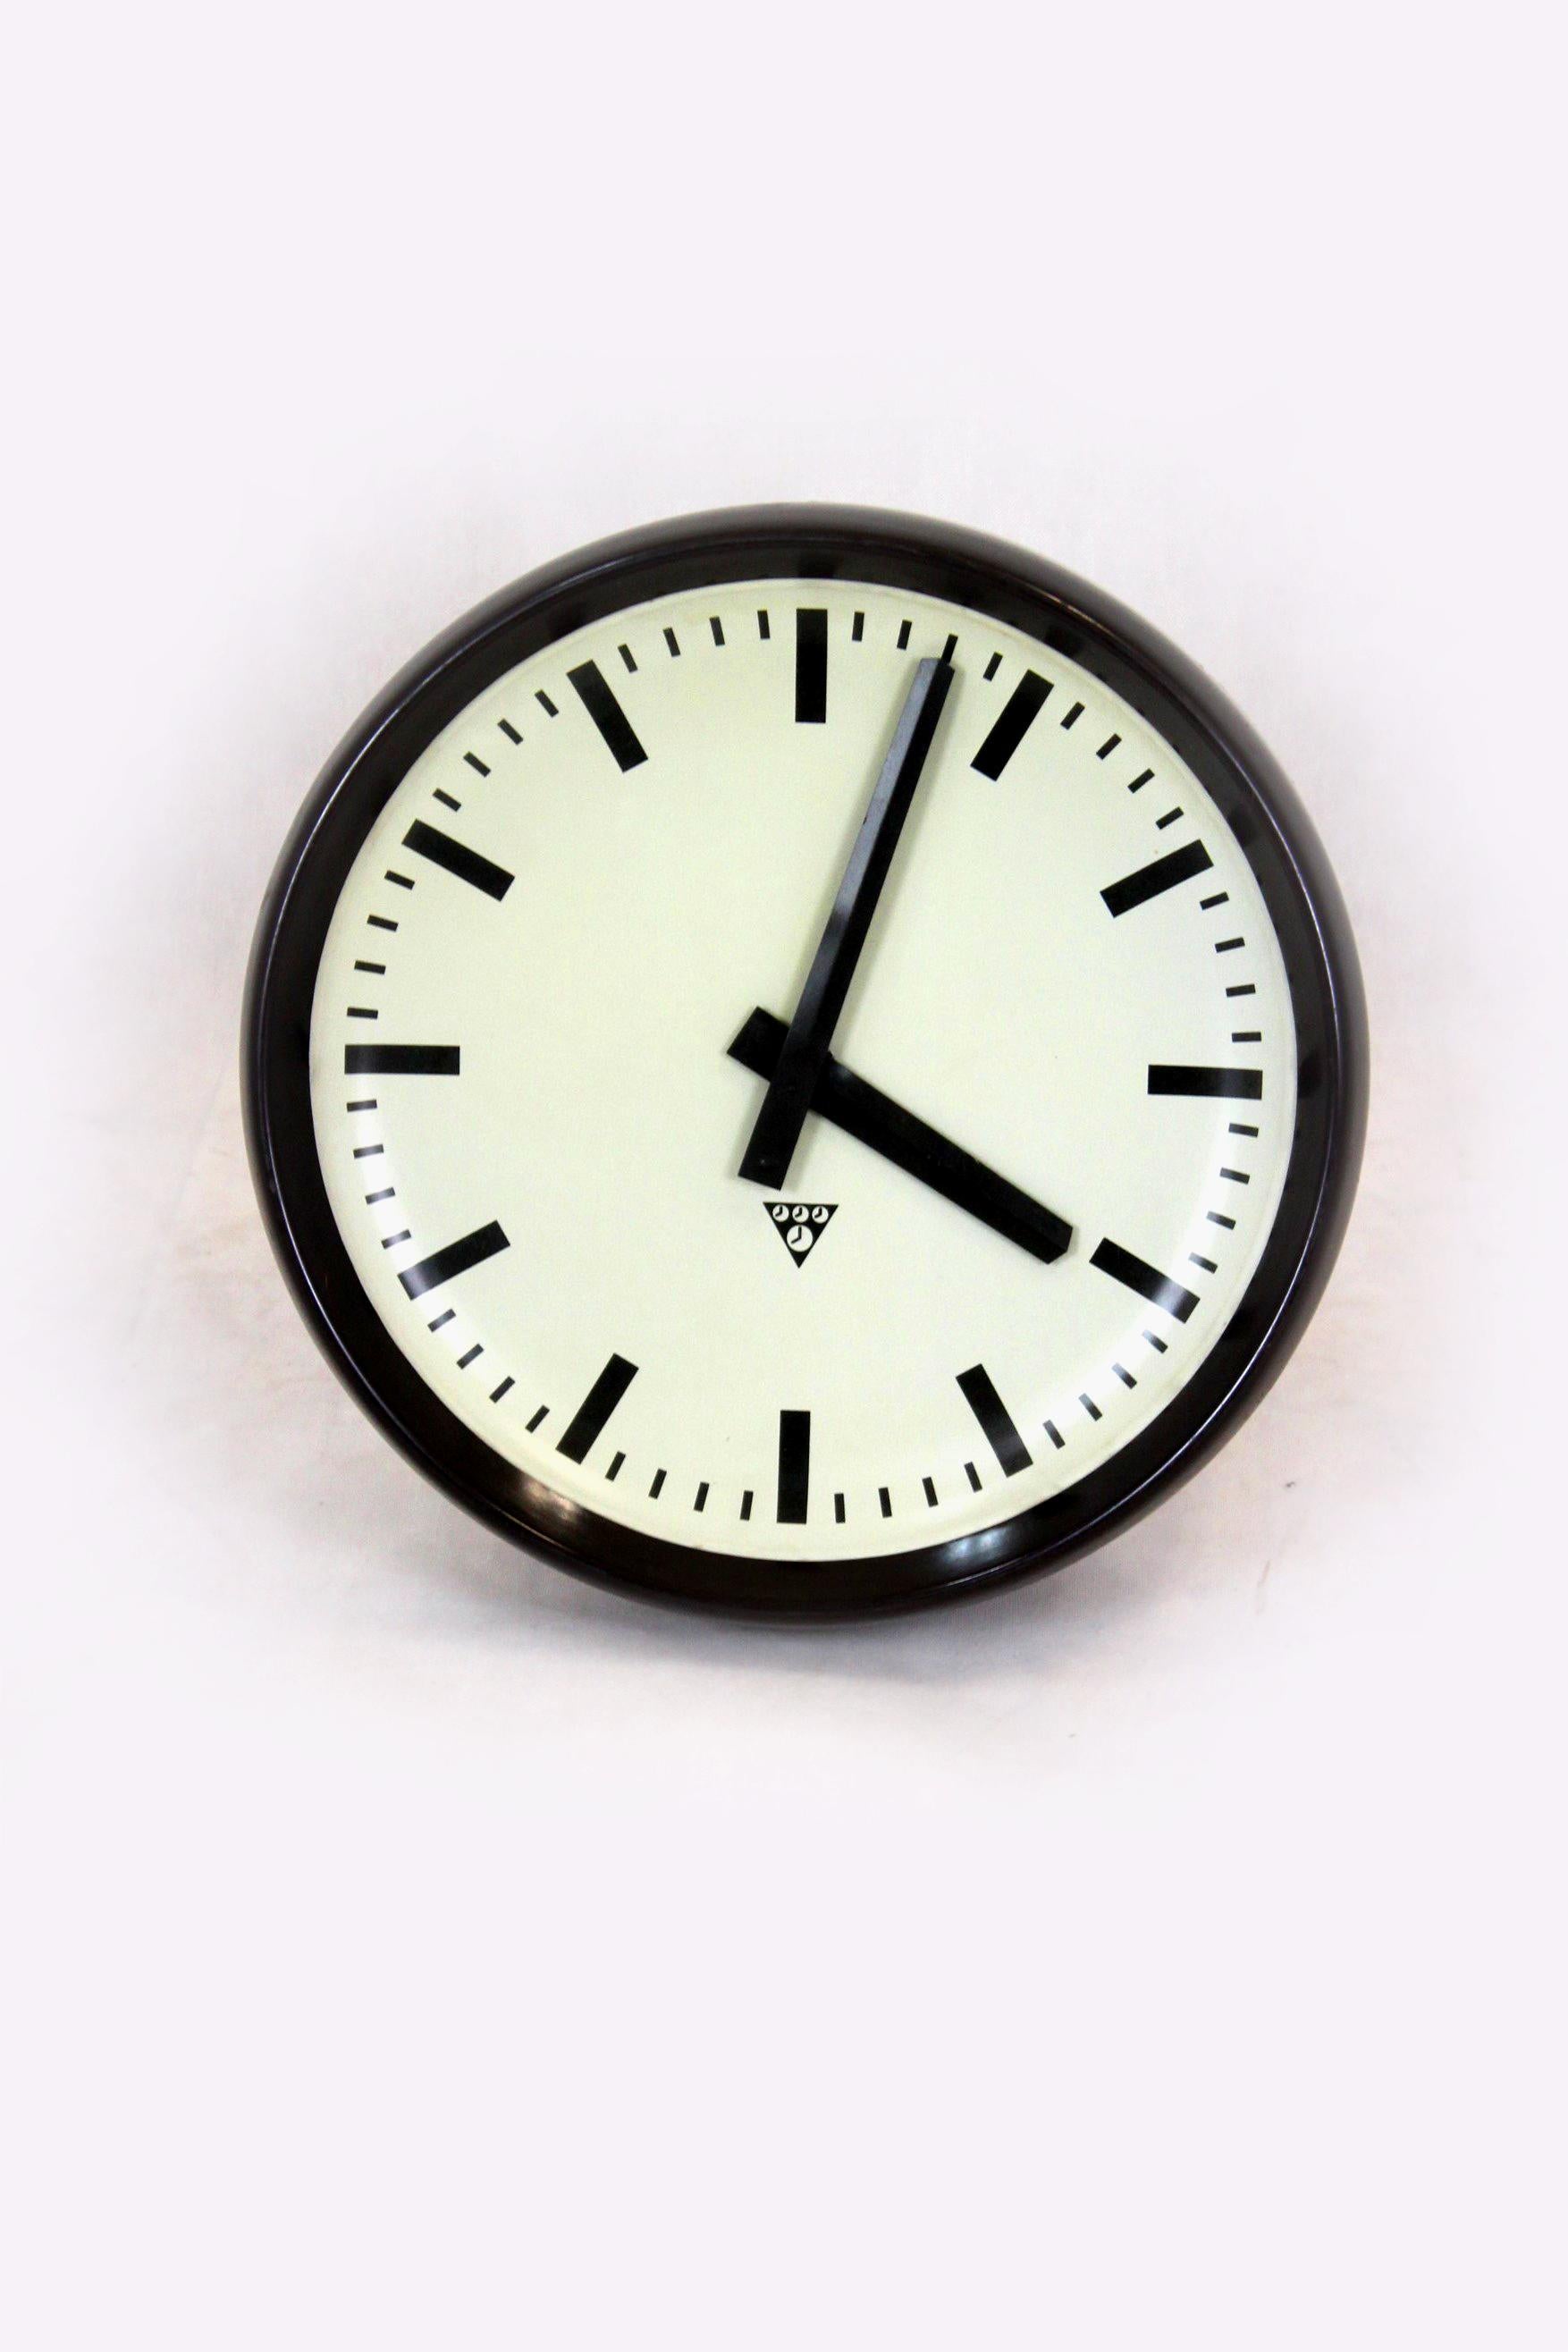 Industrial Large Bakelite Railway Clock from Pragotron, 1950s